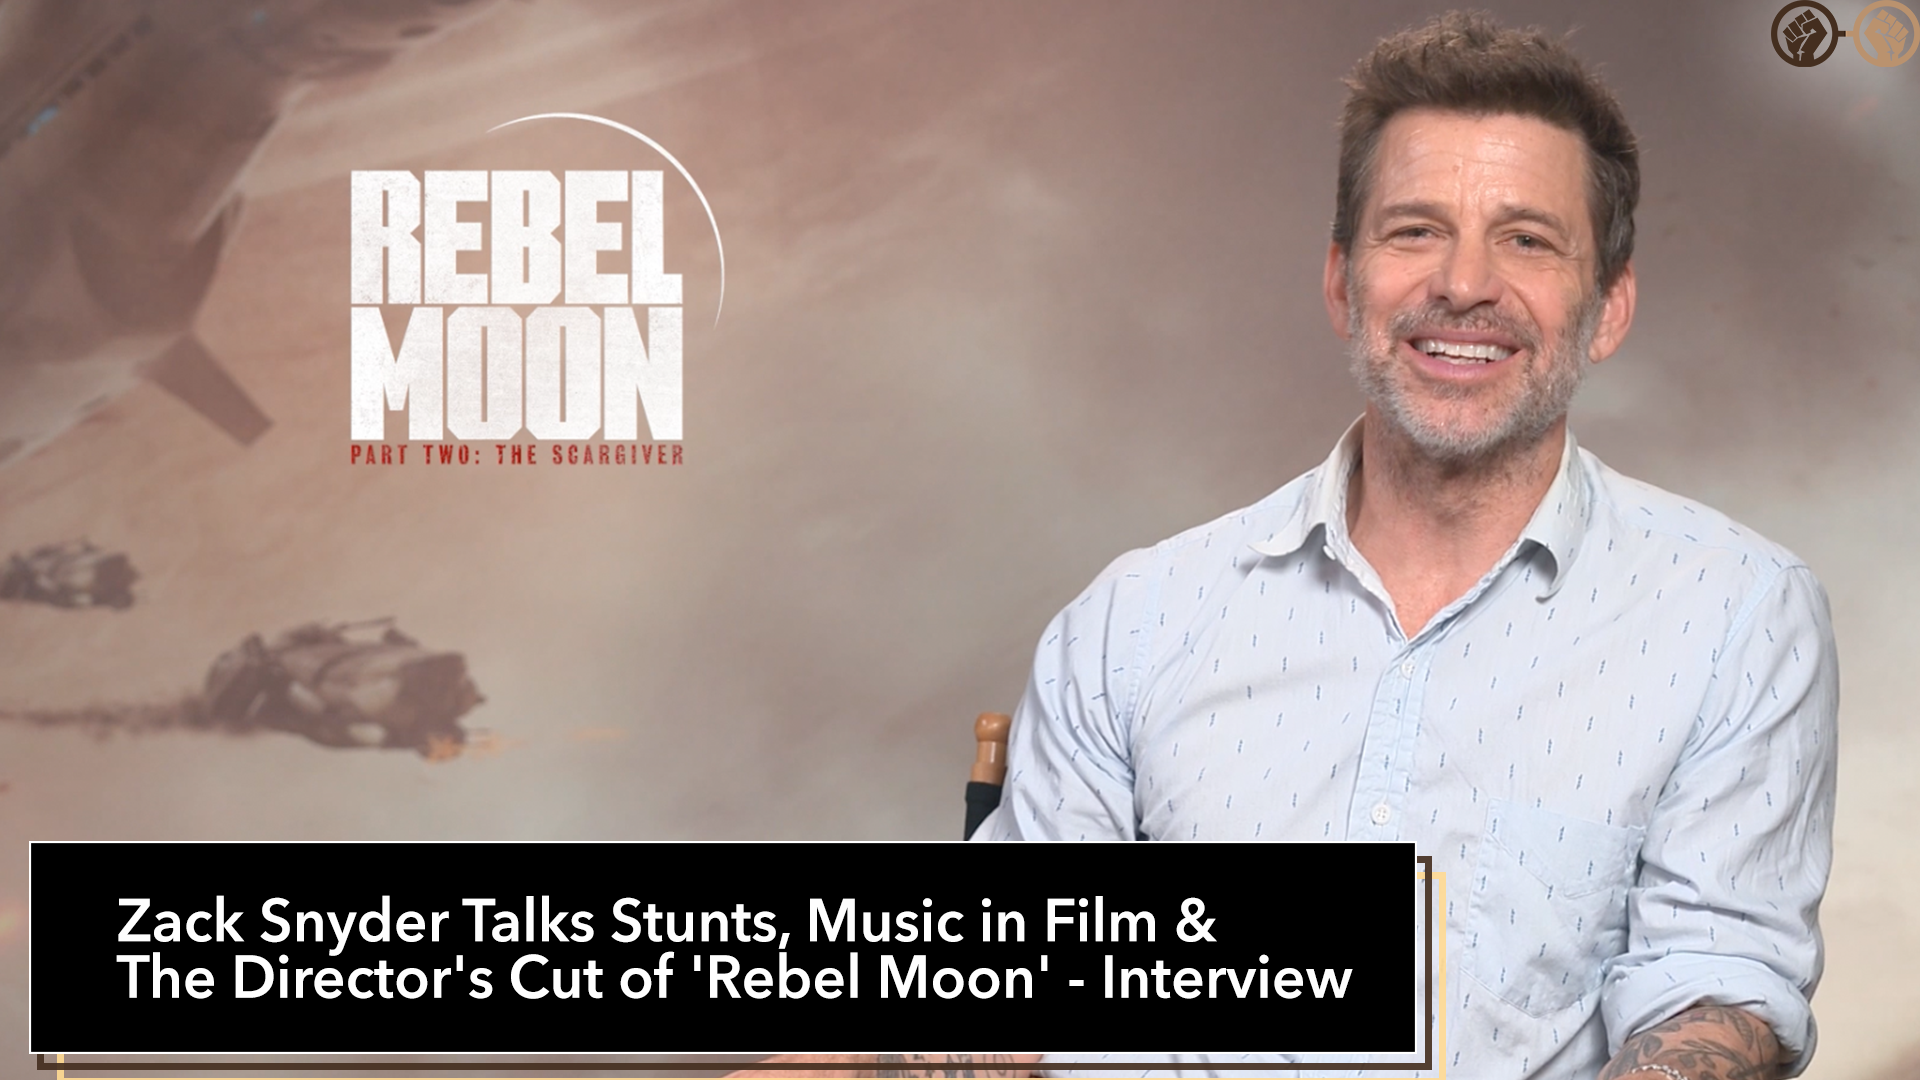 Zack Snyder Talks Stunts, Music in Film, ‘Rebel Moon’ Director’s Cut & More – Interview